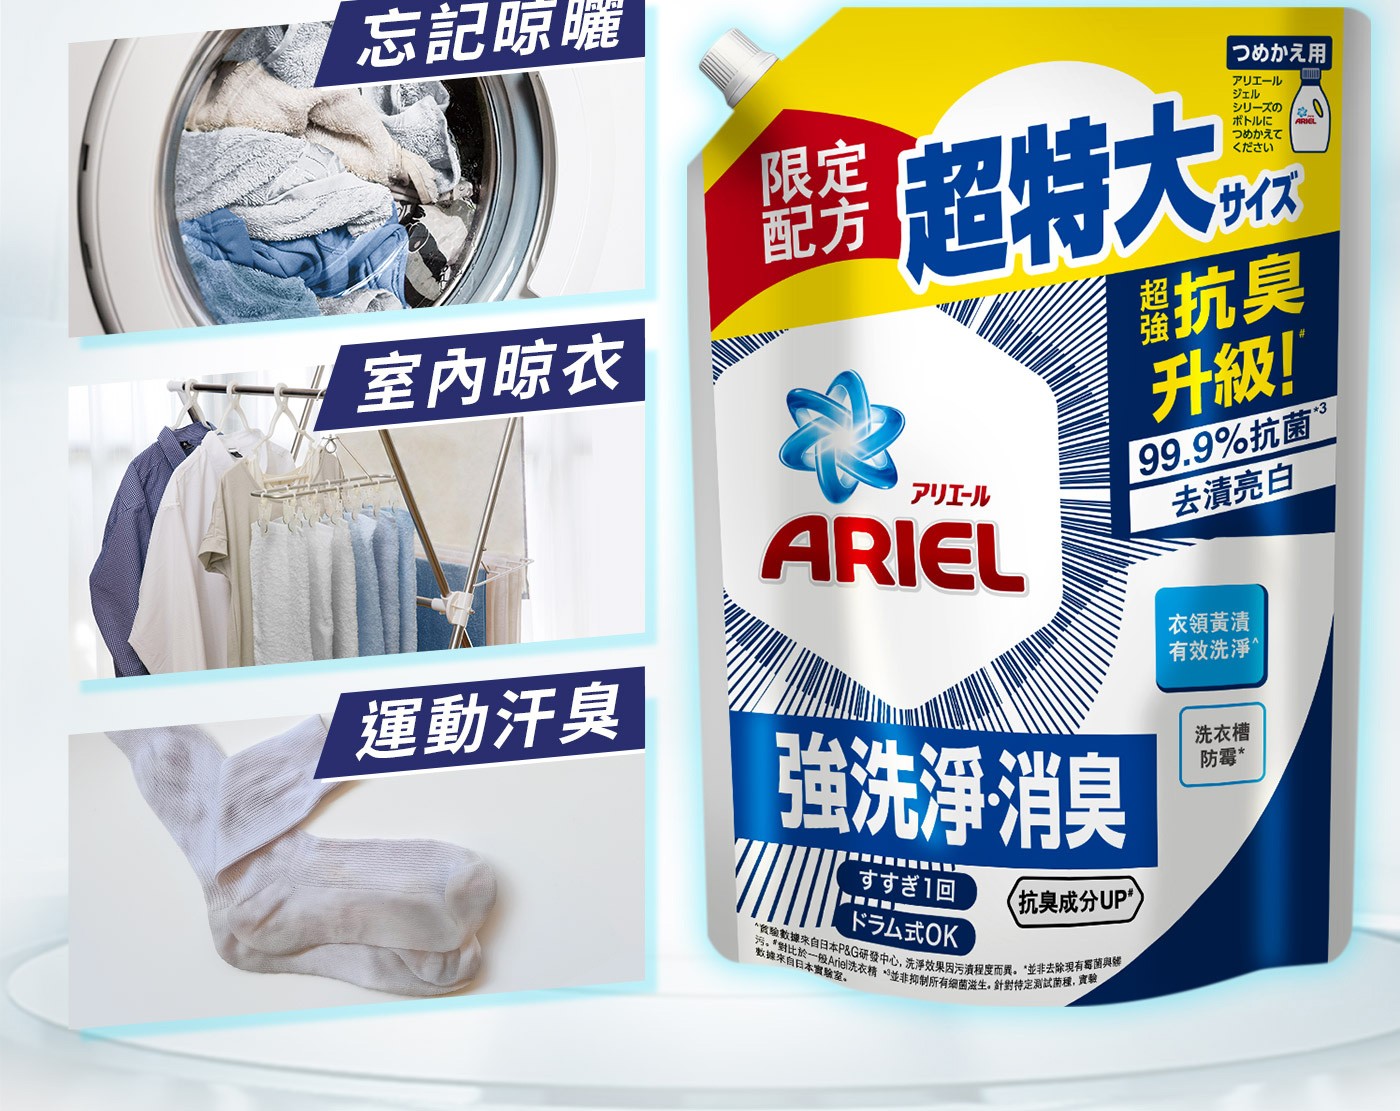 Ariel 抗菌抗臭洗衣精補充包 強洗淨 消臭